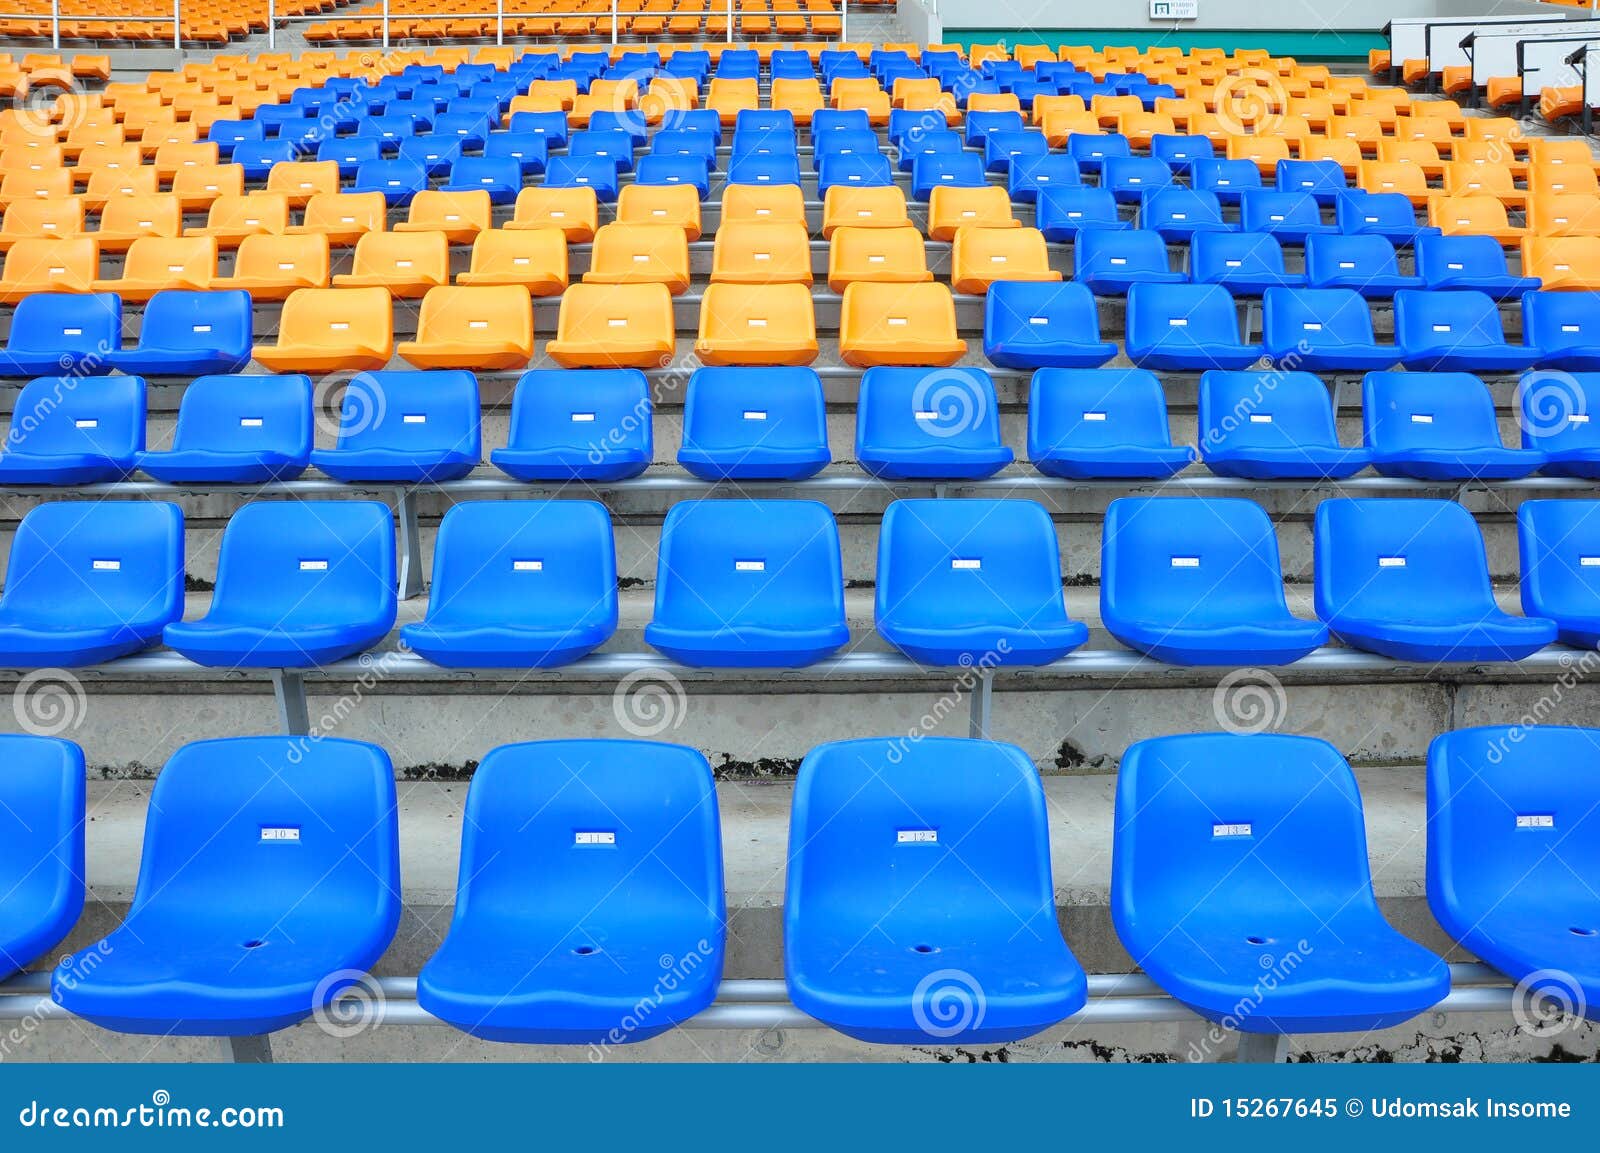 blue and orange seat